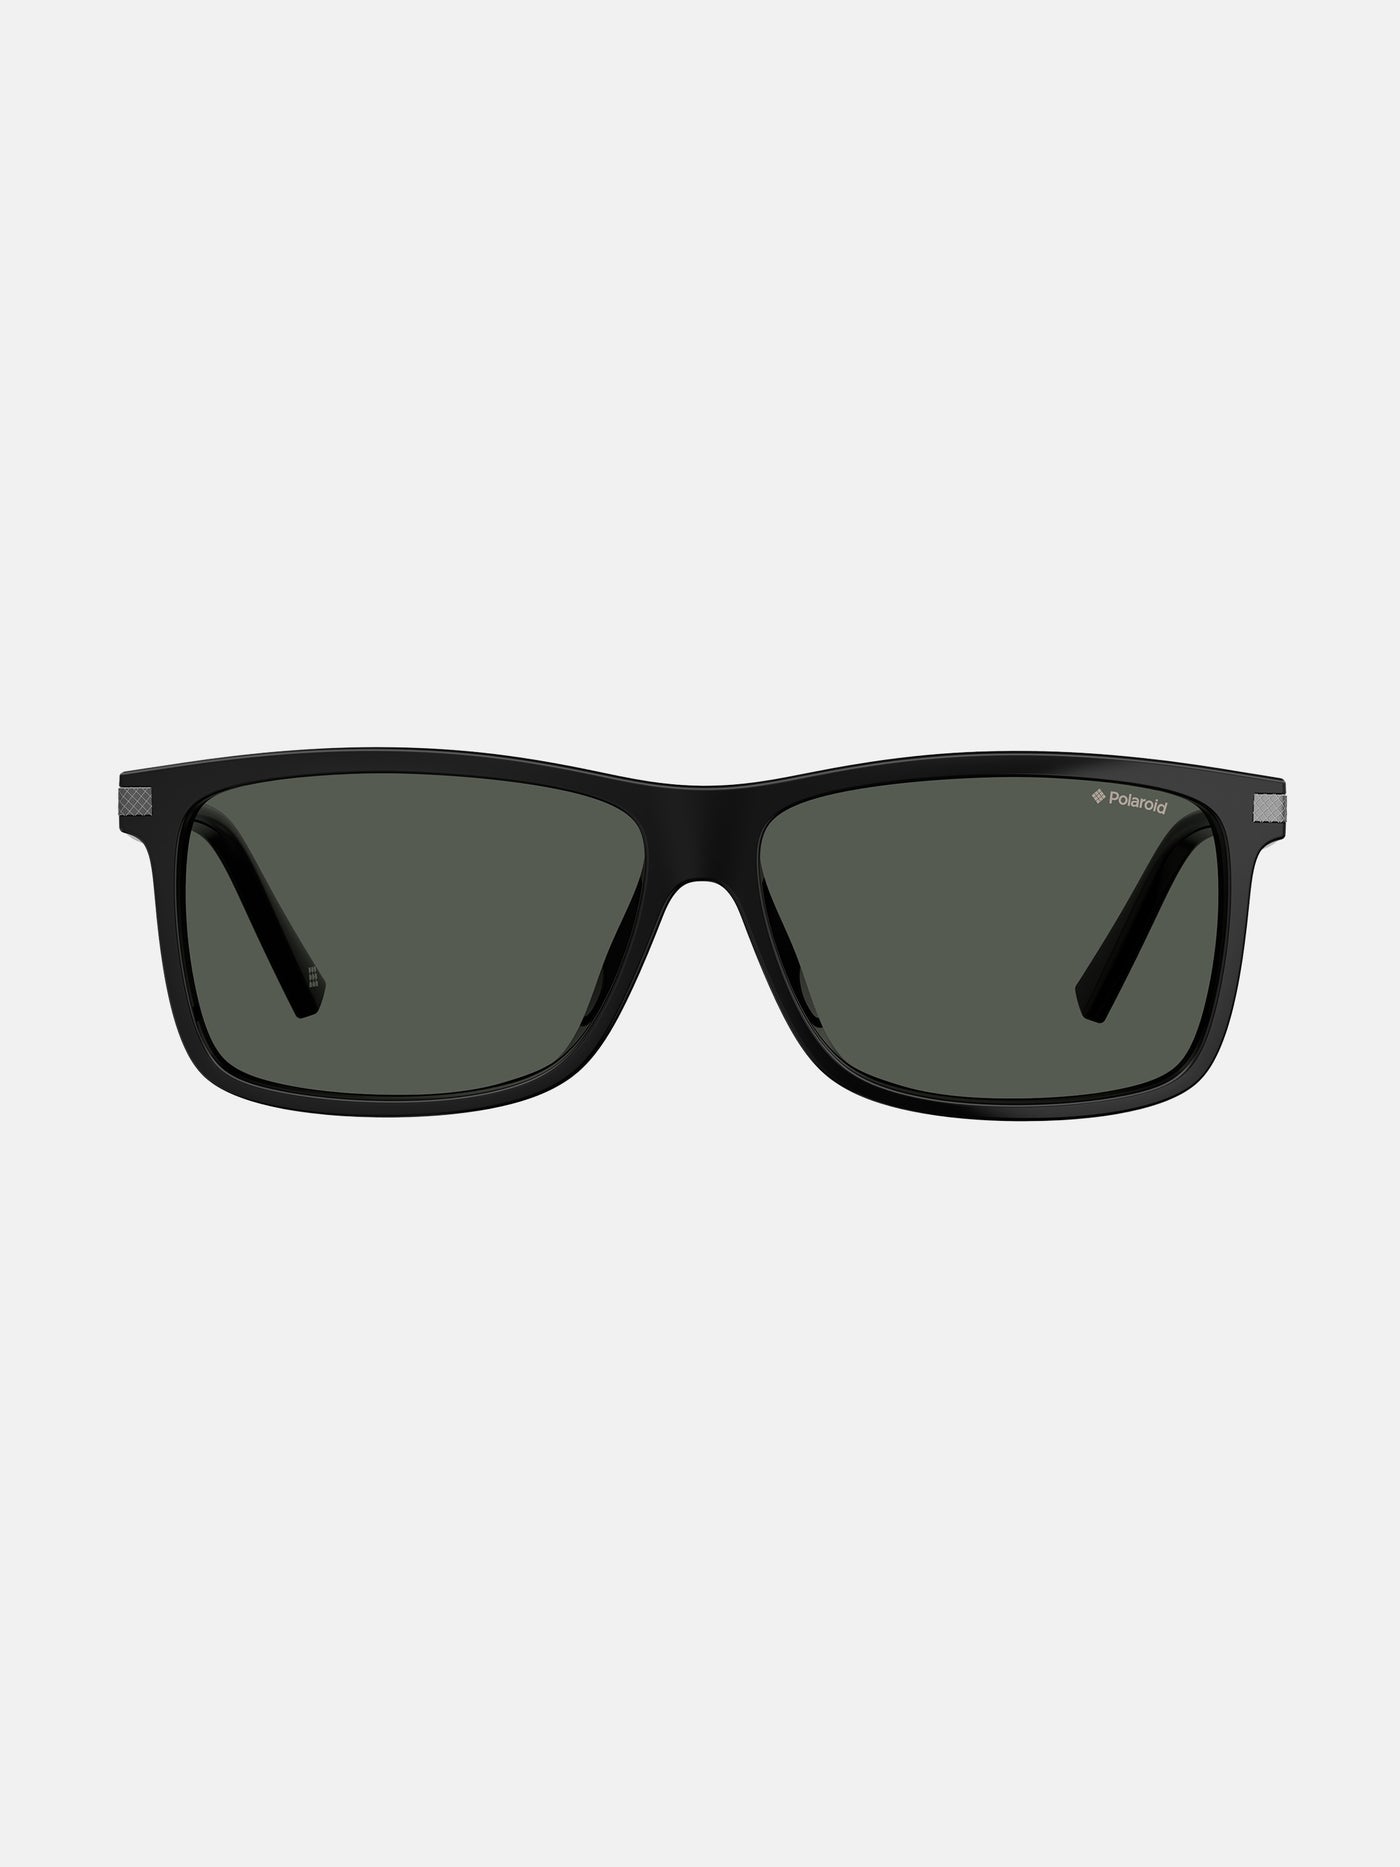 Polaroid sunglasses, square full rim frame